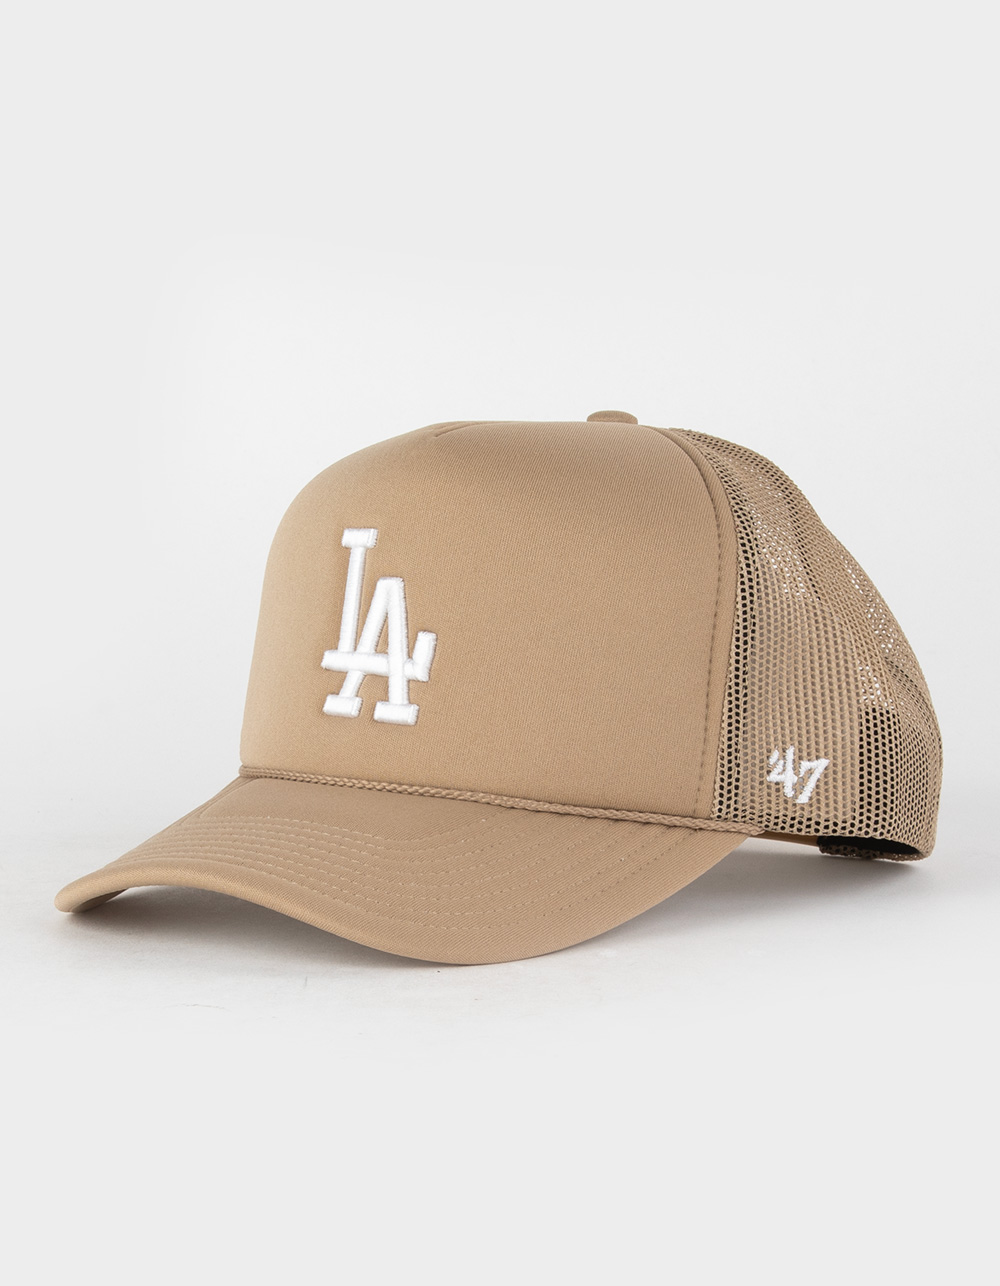 Los Angeles Dodgers Men's Khaki 47 Brand Adjustable Hat